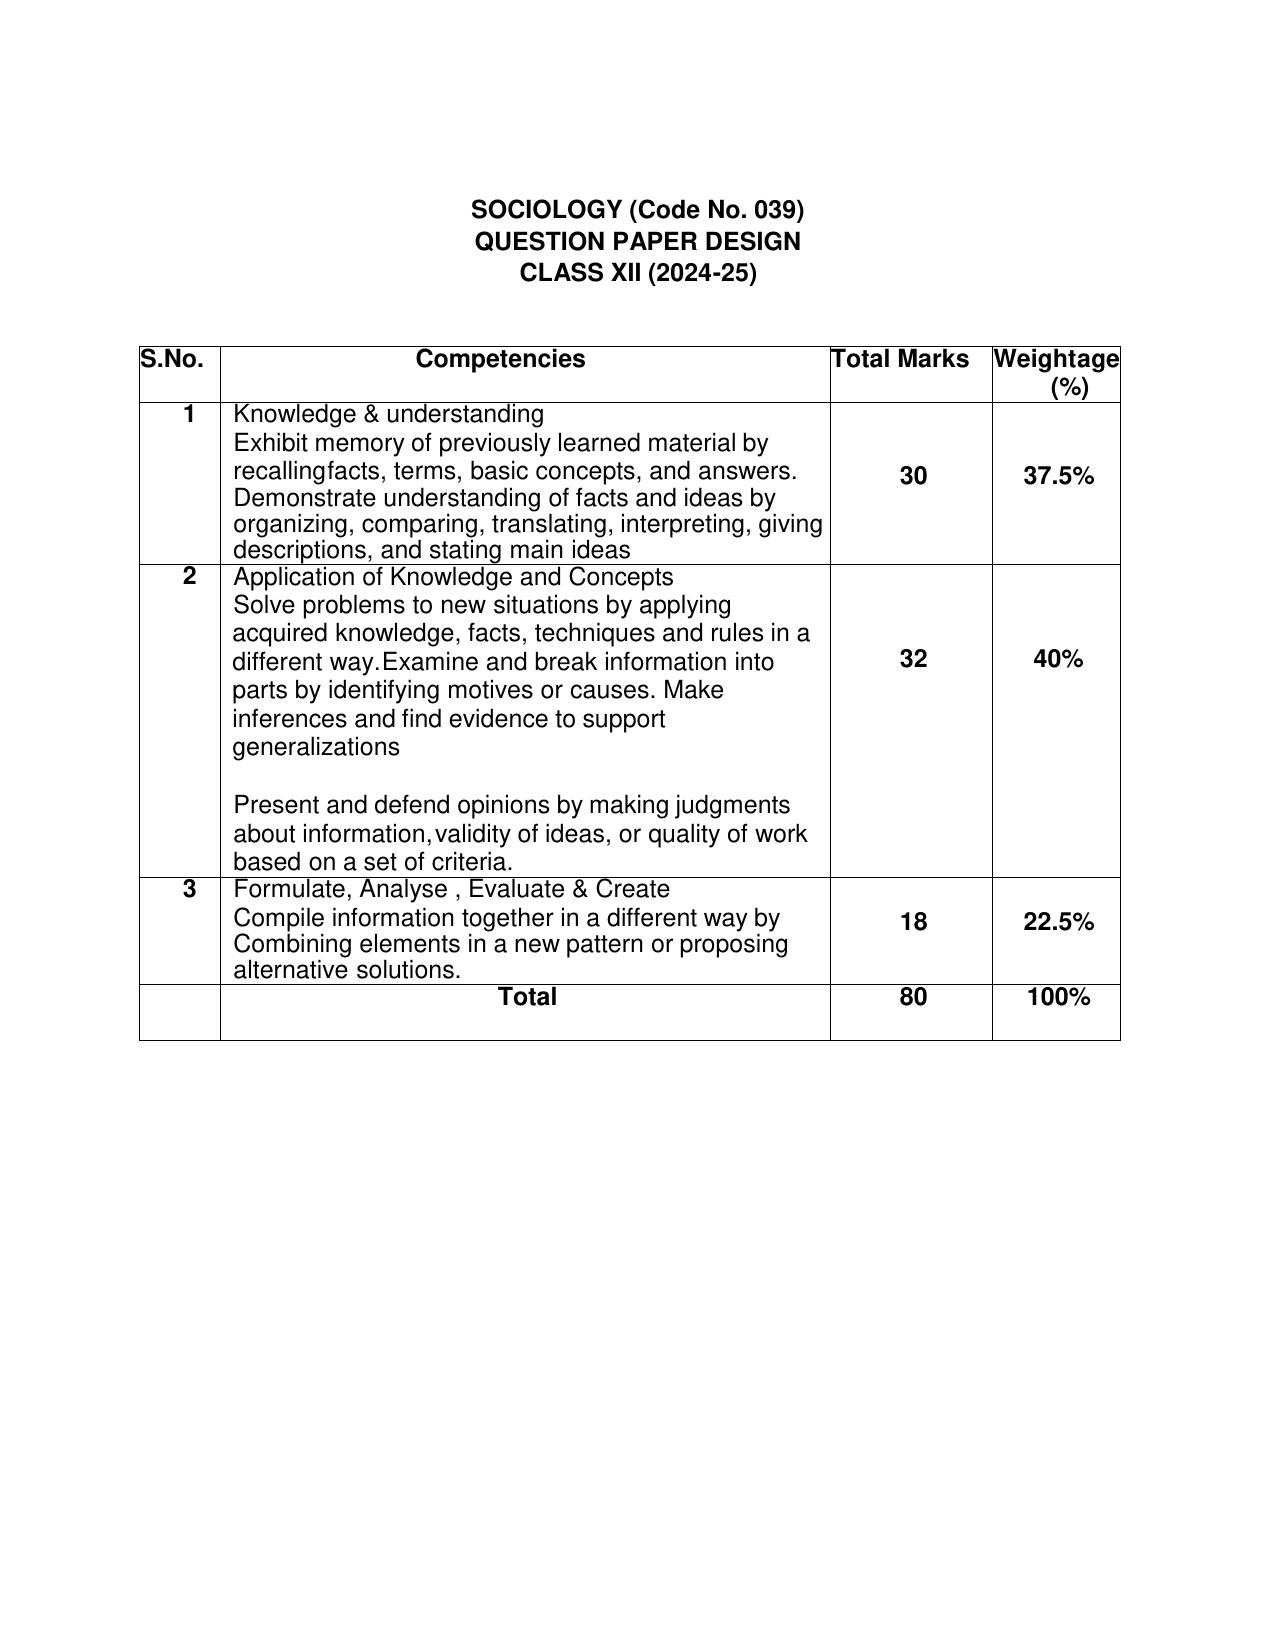 CBSE Class 11 & 12 Syllabus 2022-23 - Sociology - Page 10